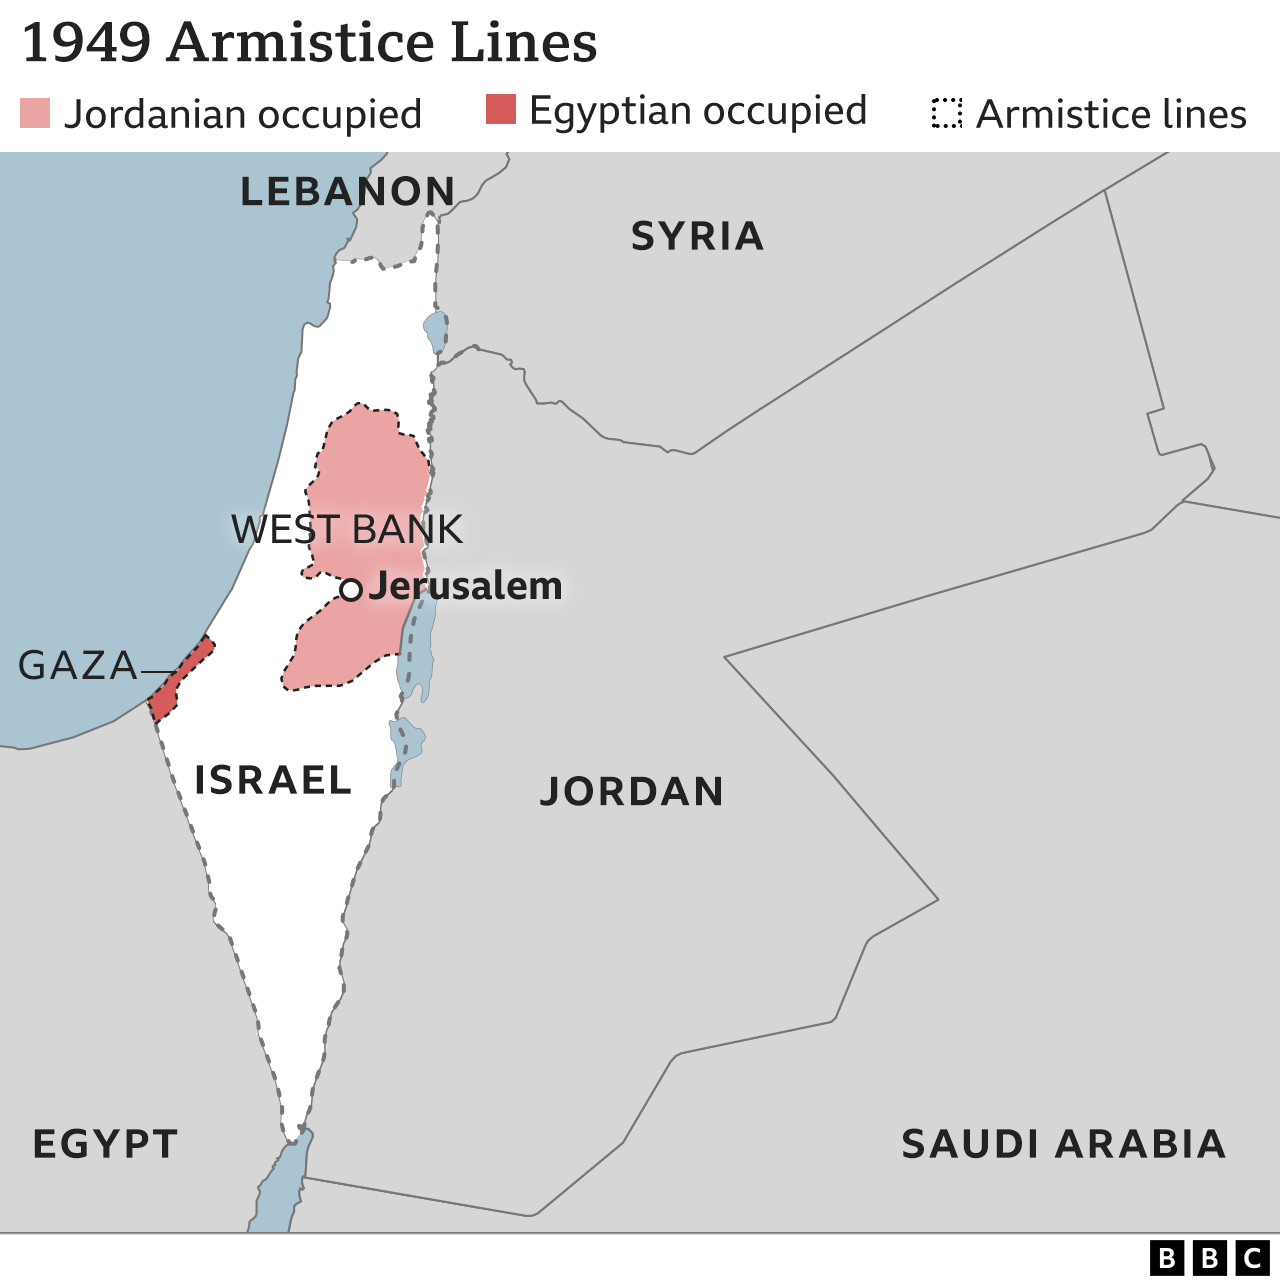 Map showing the 1949 Armistice Lines